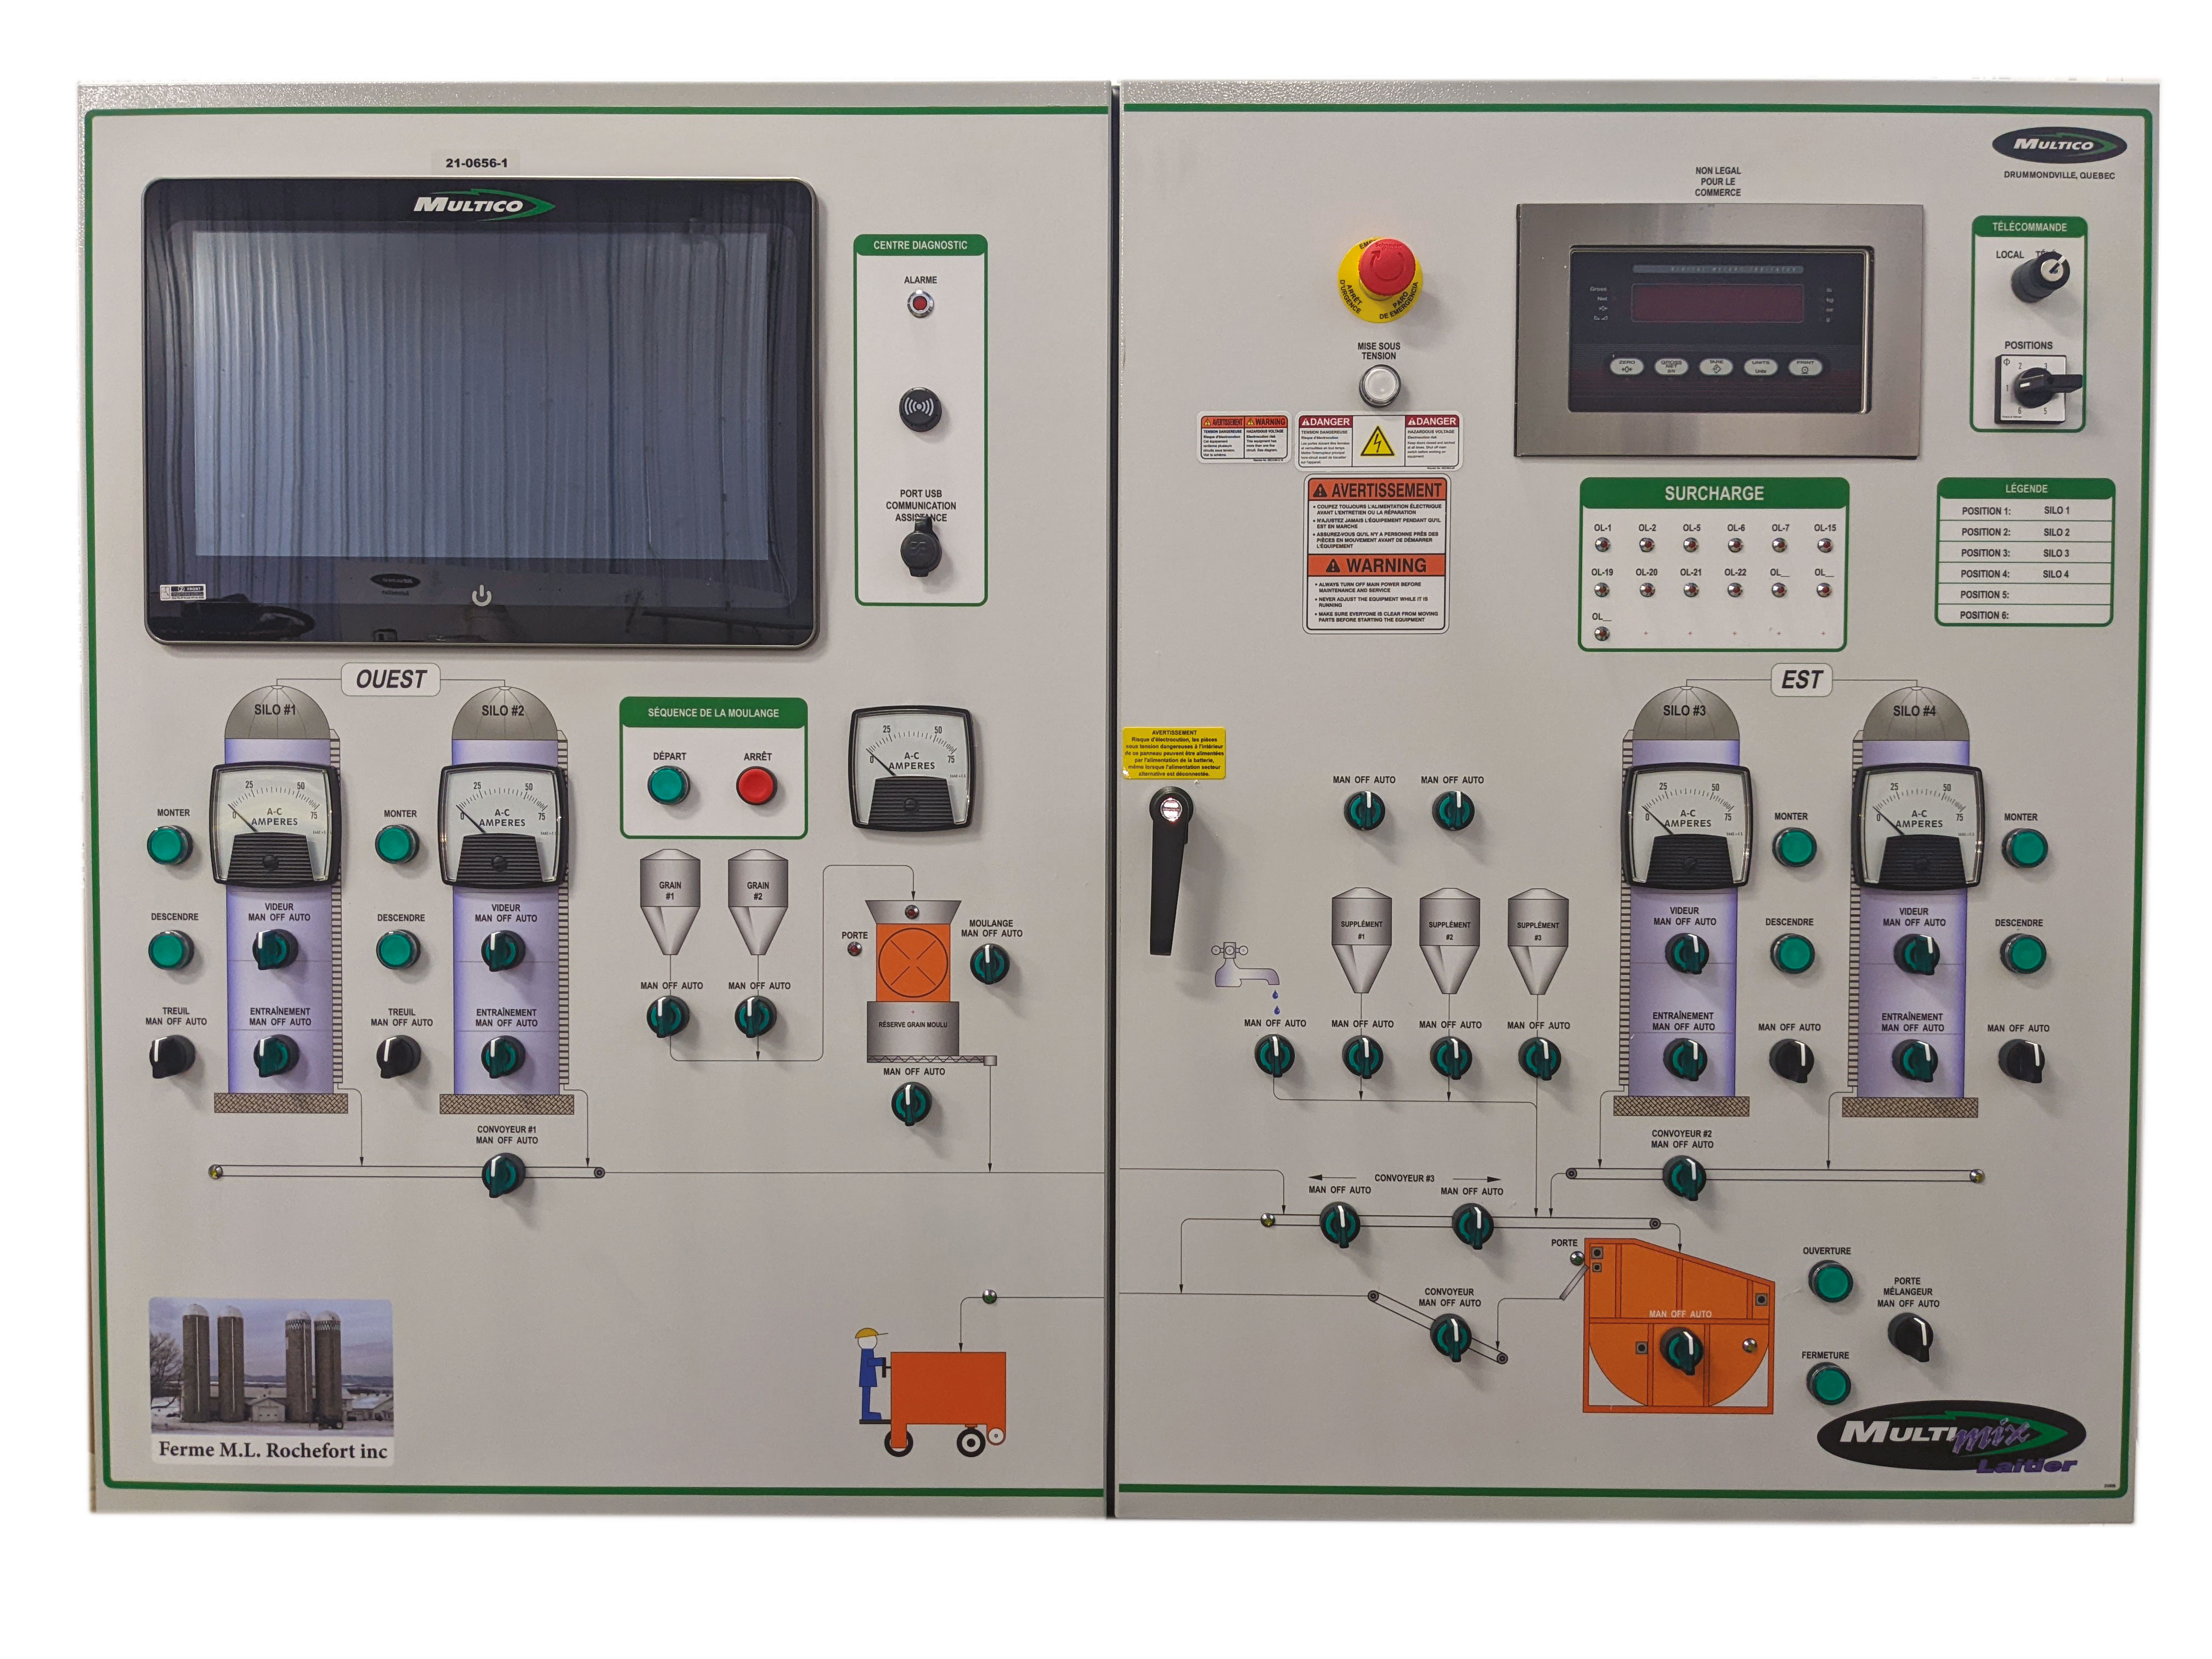 Control panel Multimix Laitier